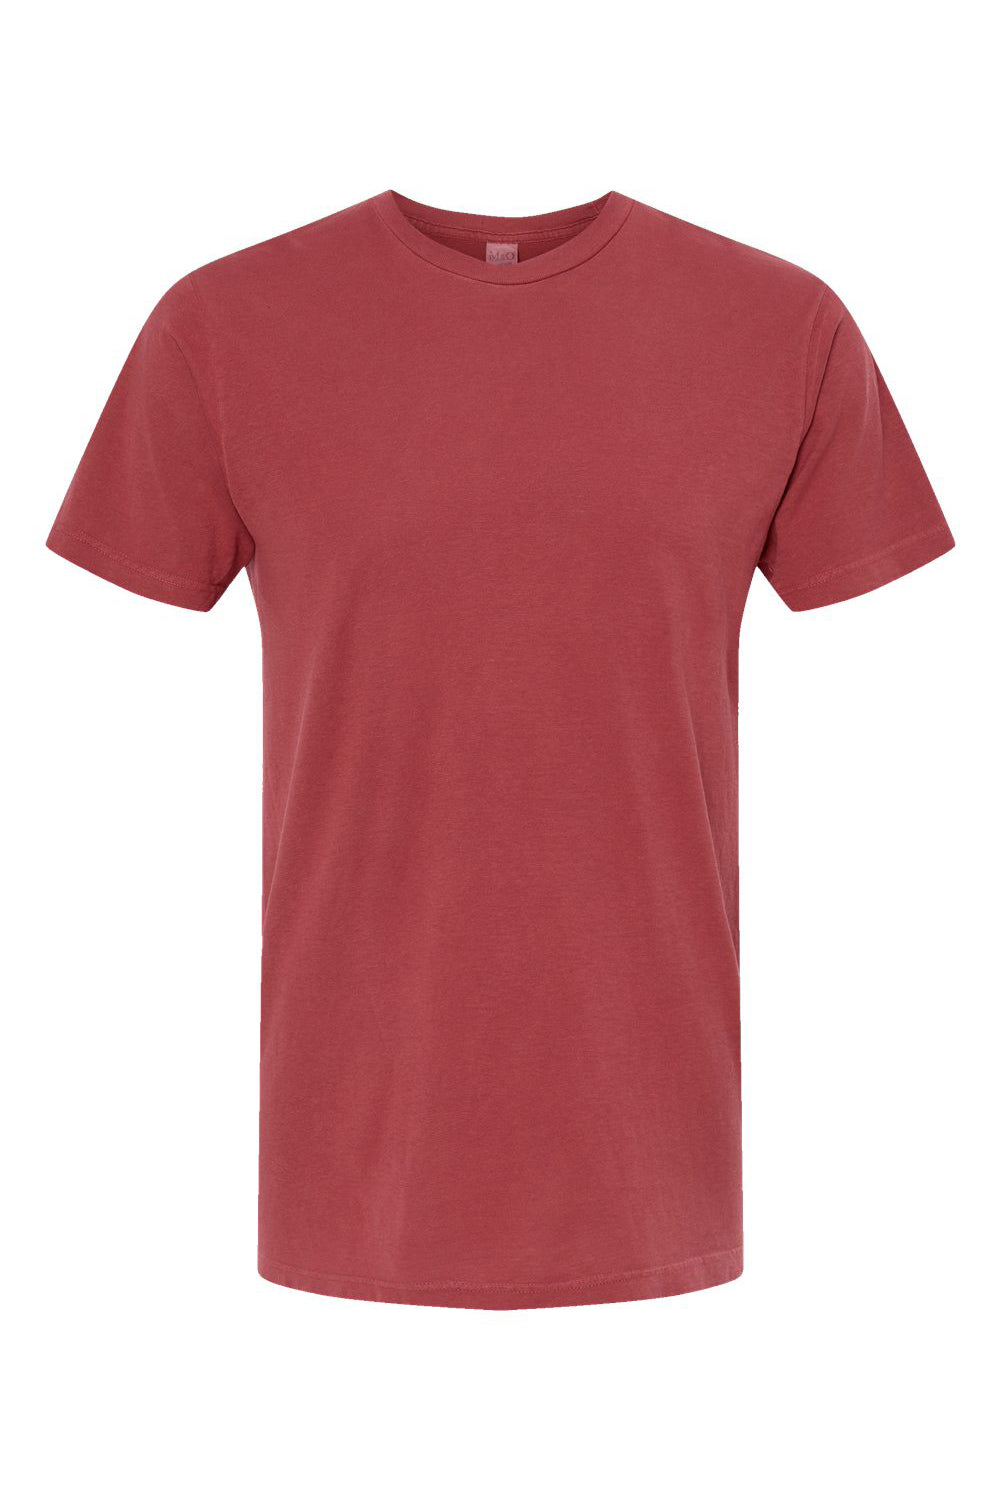 M&O 6500M Mens Vintage Garment Dyed Short Sleeve Crewneck T-Shirt Crimson Red Flat Front